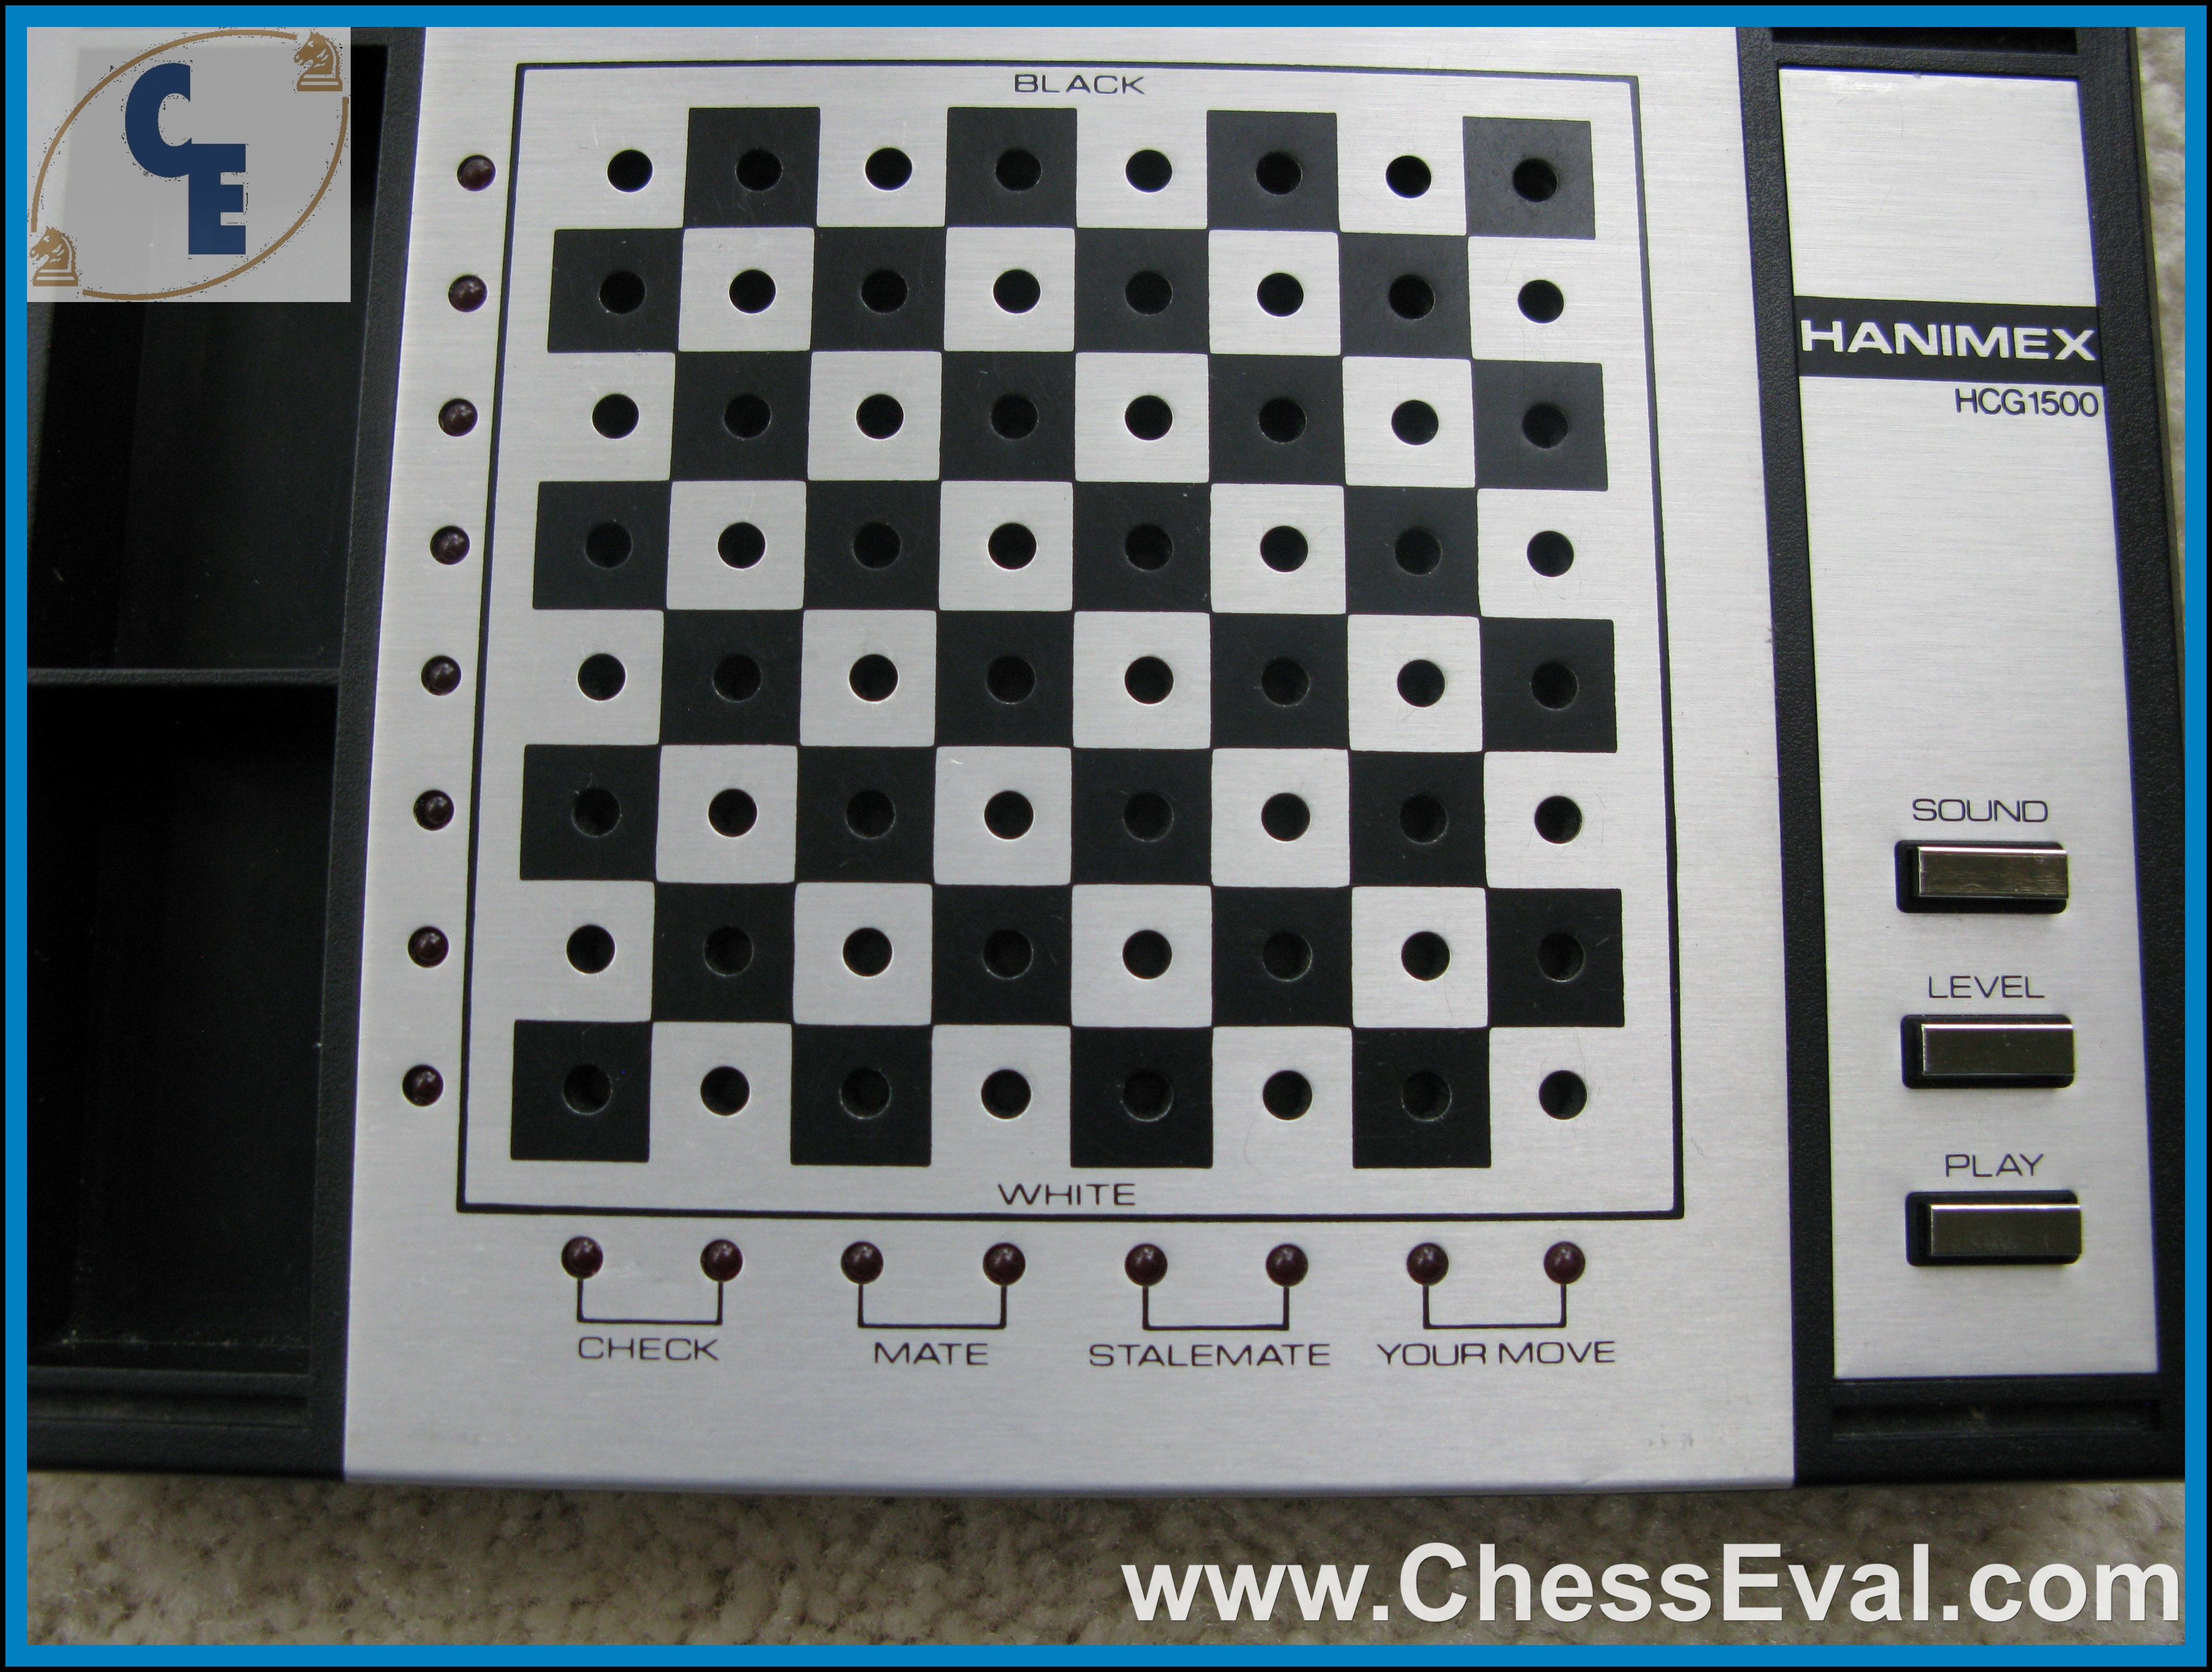 ChessBase Reader 14.9 Download (Free) - CBReader.exe